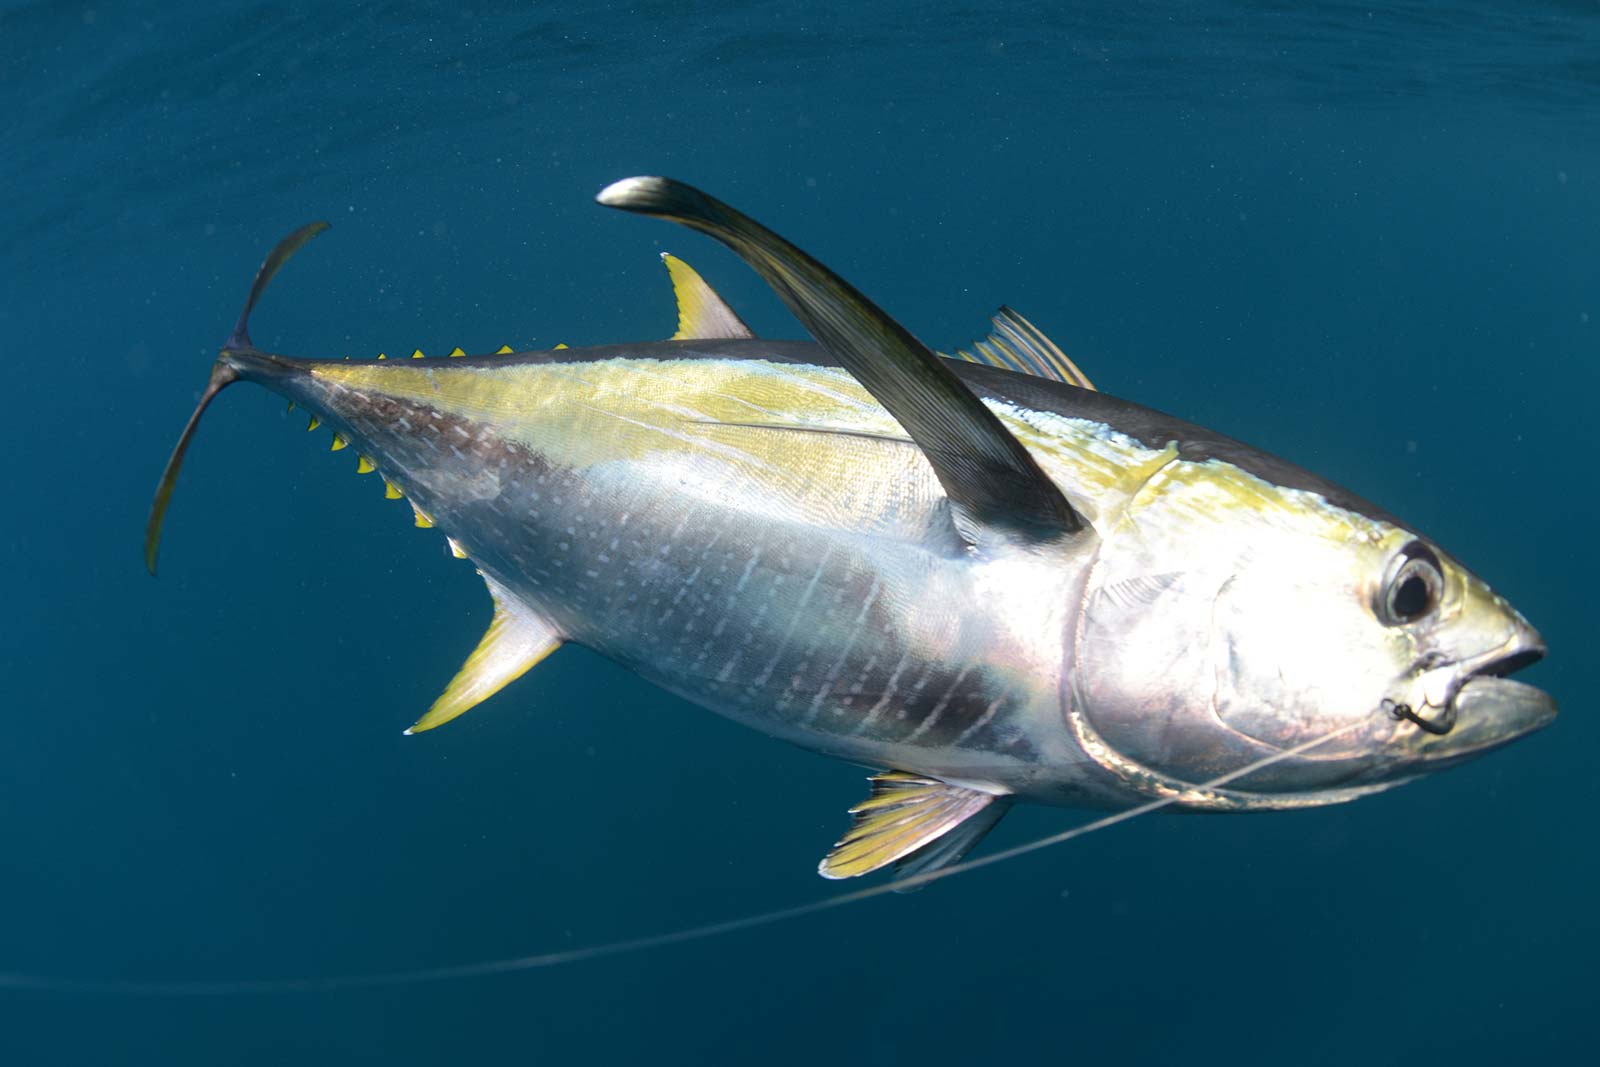 https://www.biopsea.com/wp-content/uploads/2019/07/yellowfin-tuna-landing-image.jpg